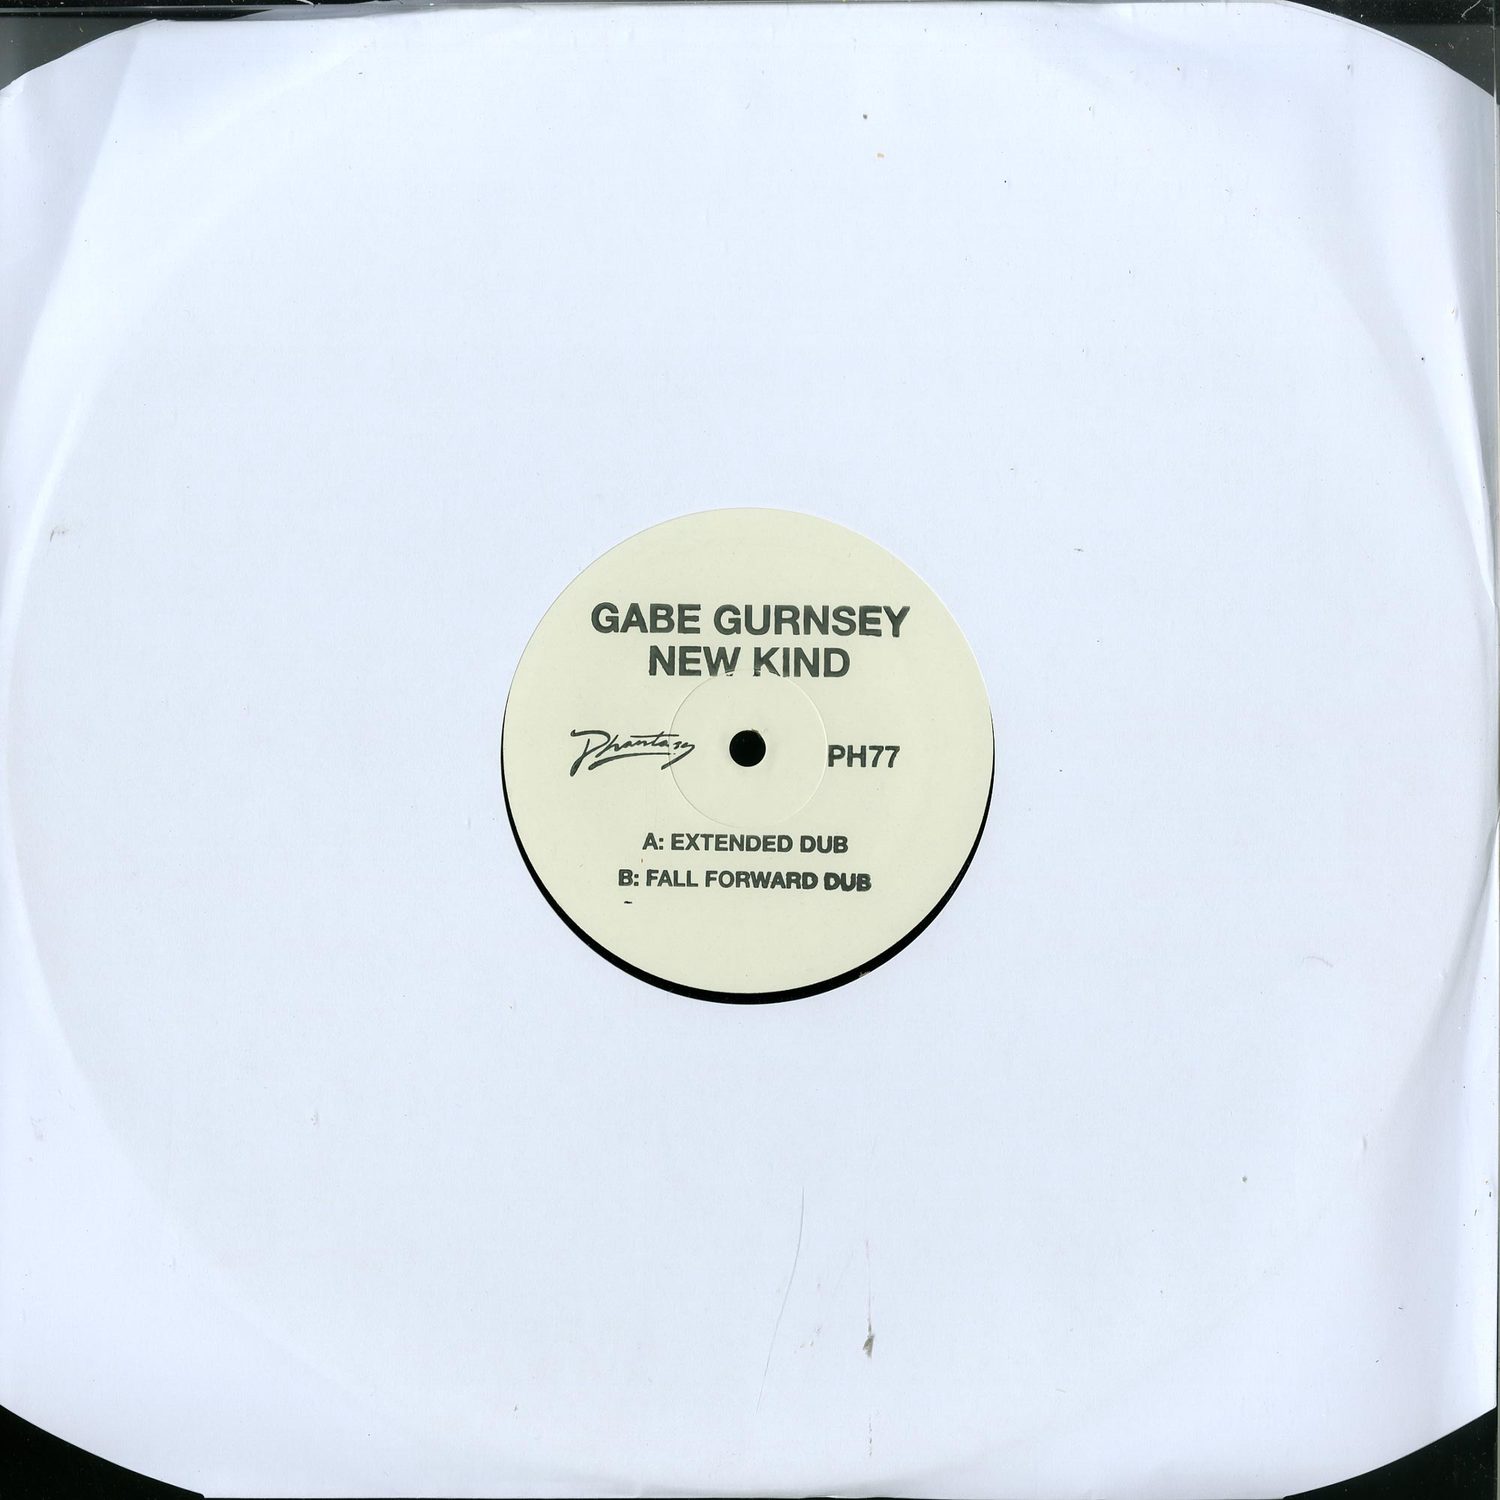 Gabe Gurnsey - NEW KIND 